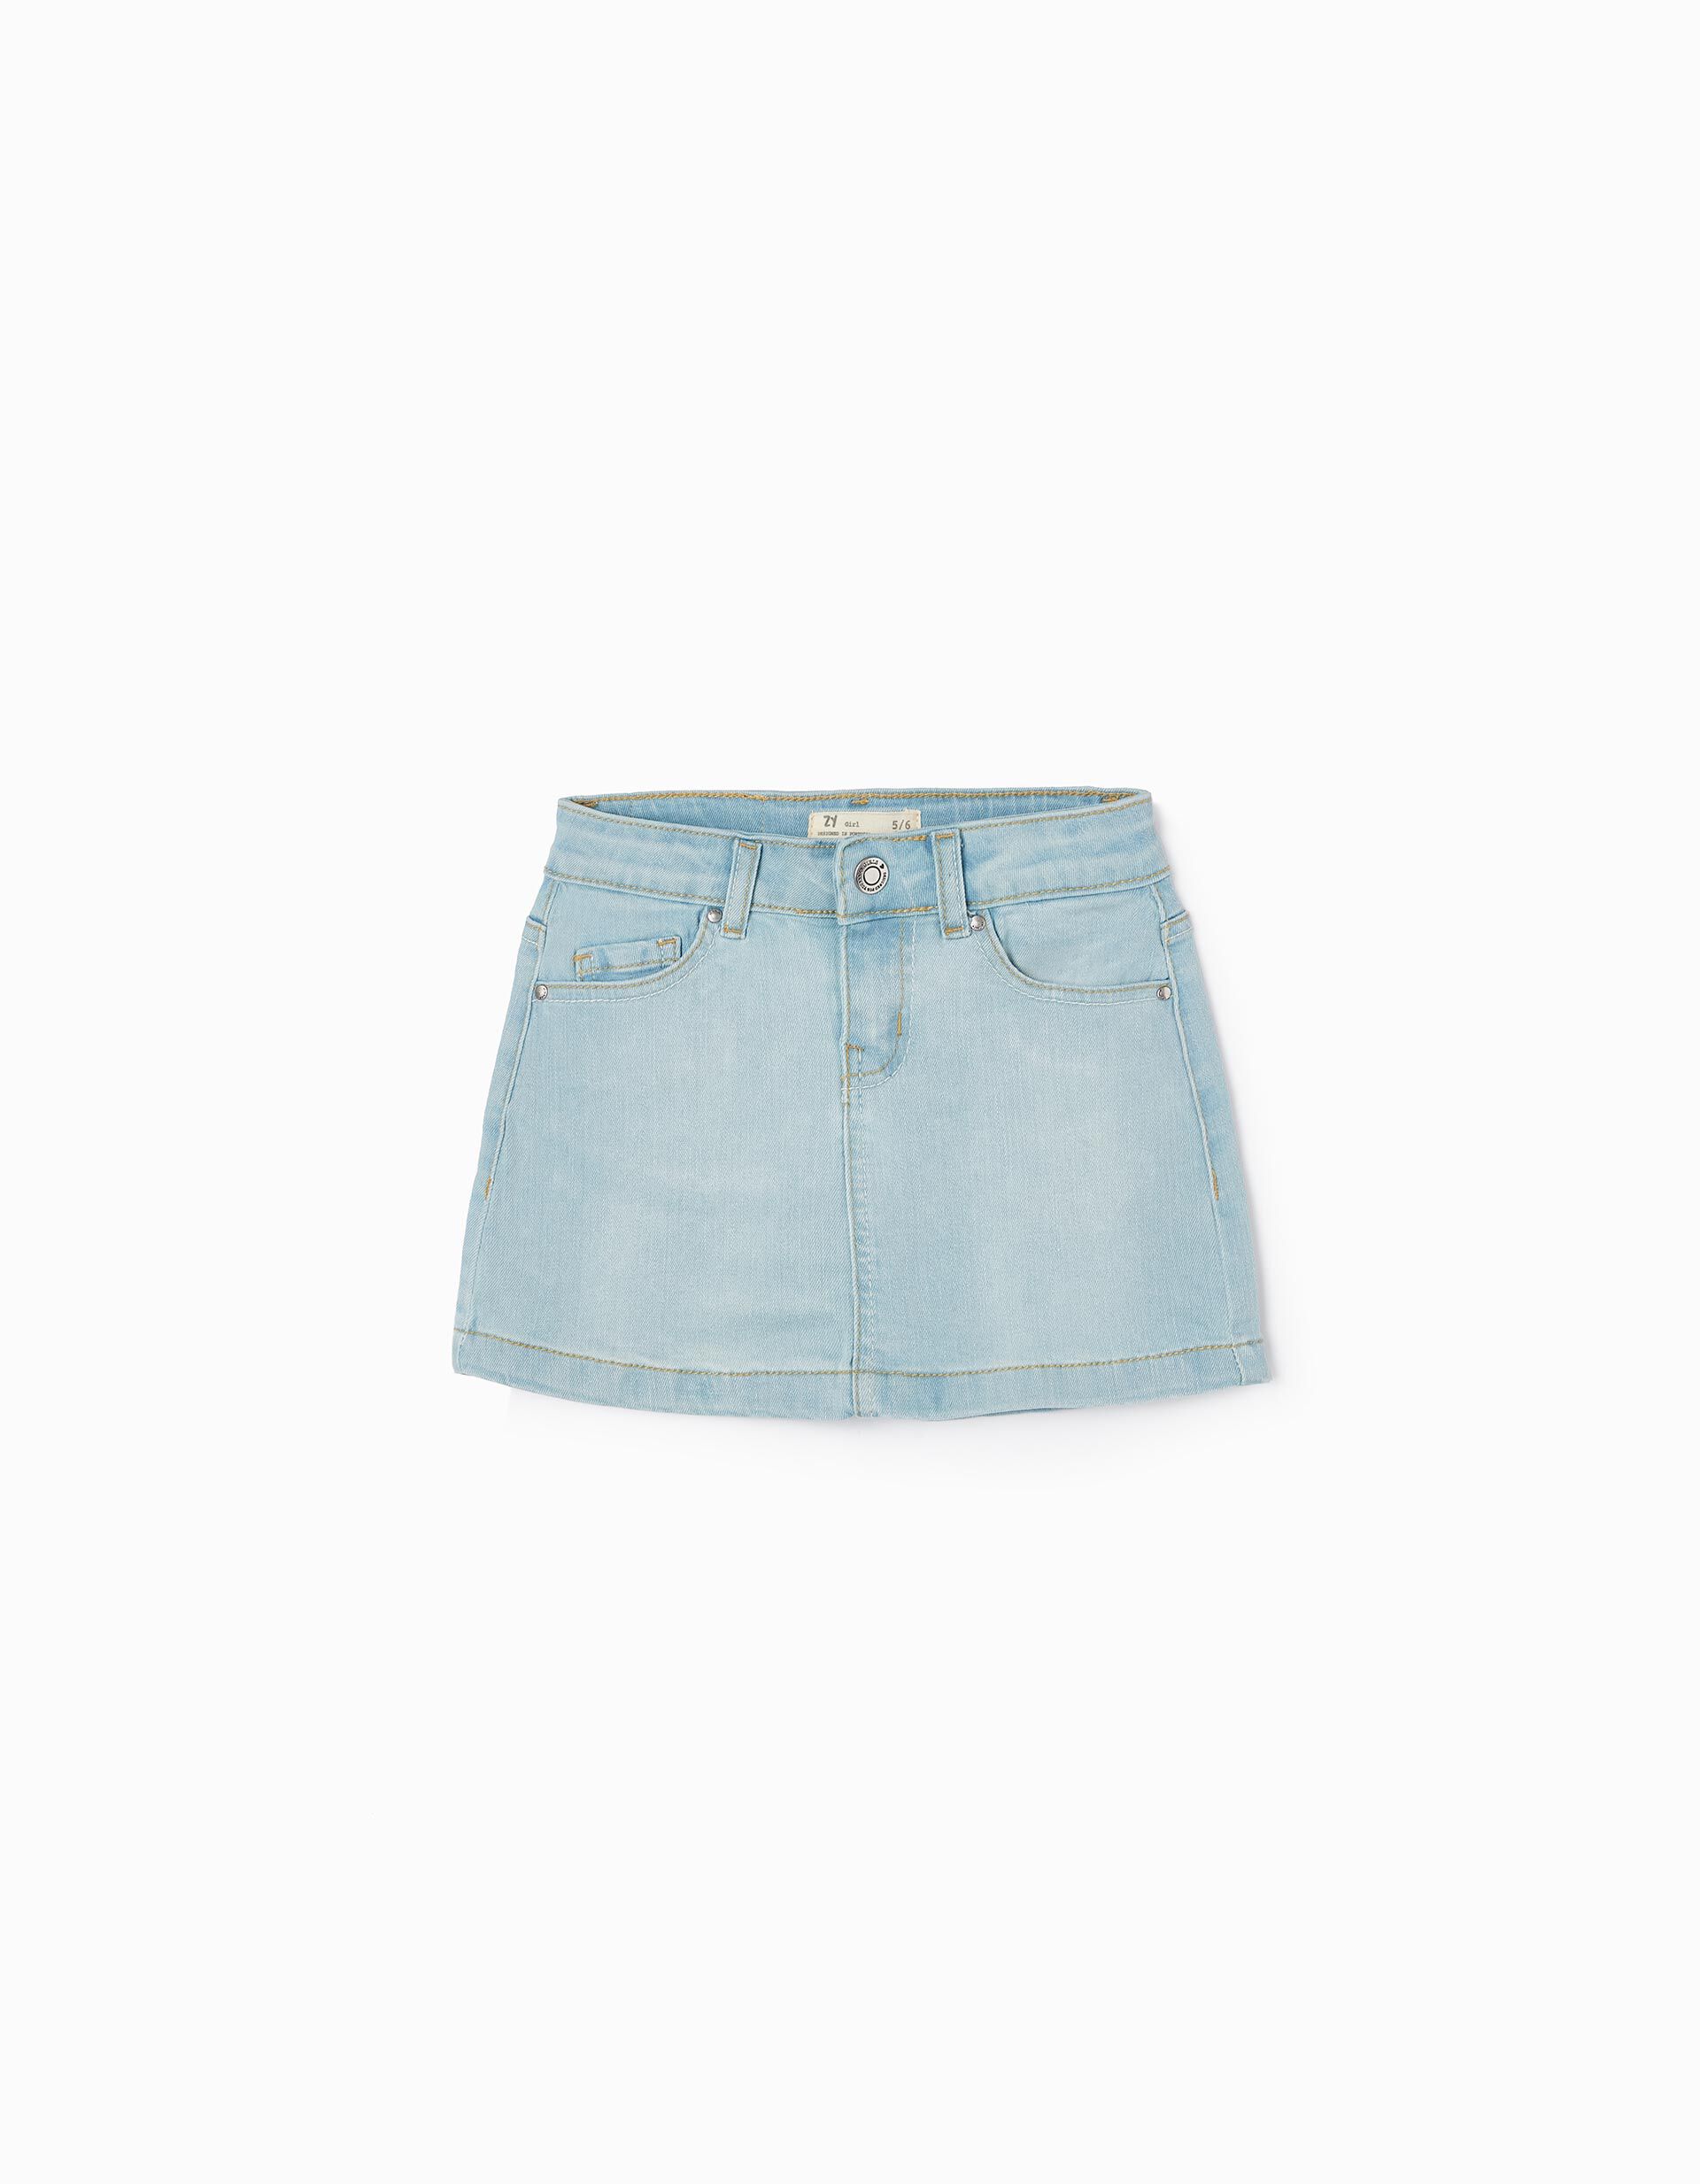 Gureui Baby Girls Summer Denim Skirt Solid A Line Elastic Waist Colored Button Short Mini Skorts Skirts with Pockets 